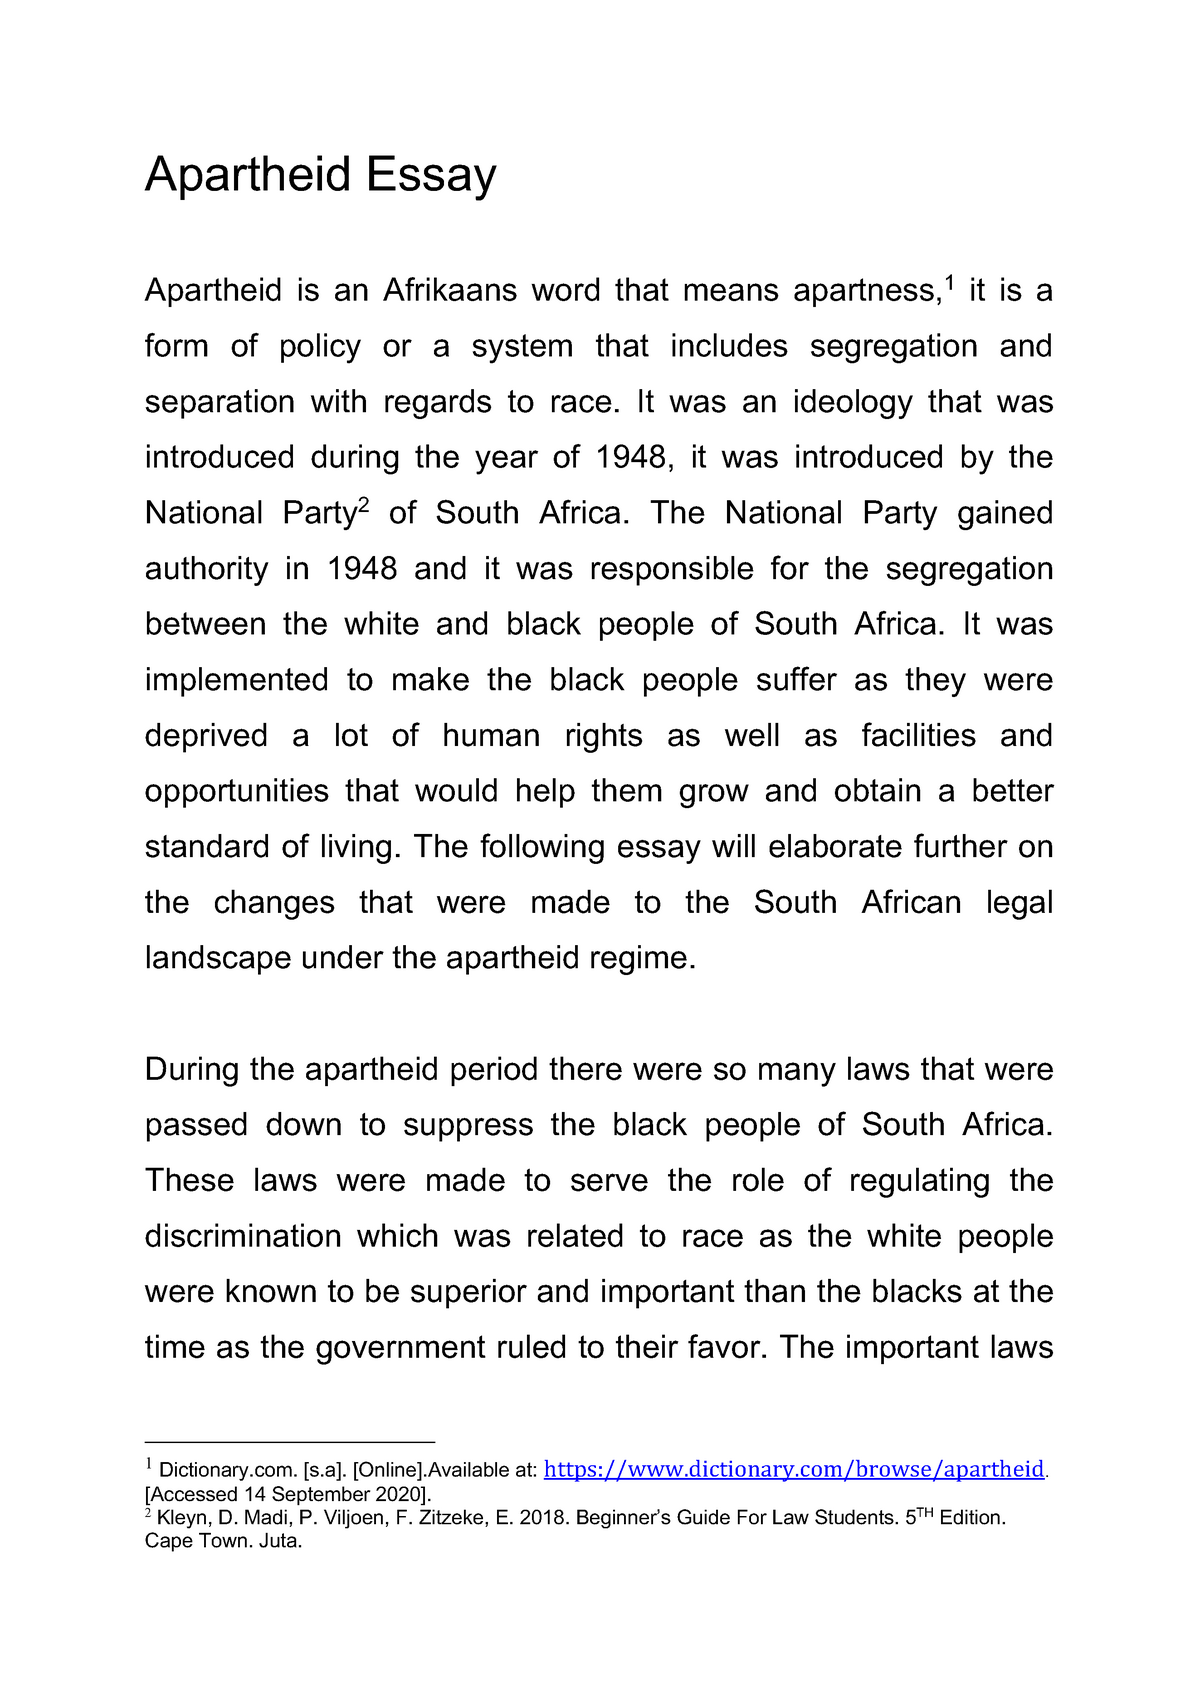 history essay apartheid